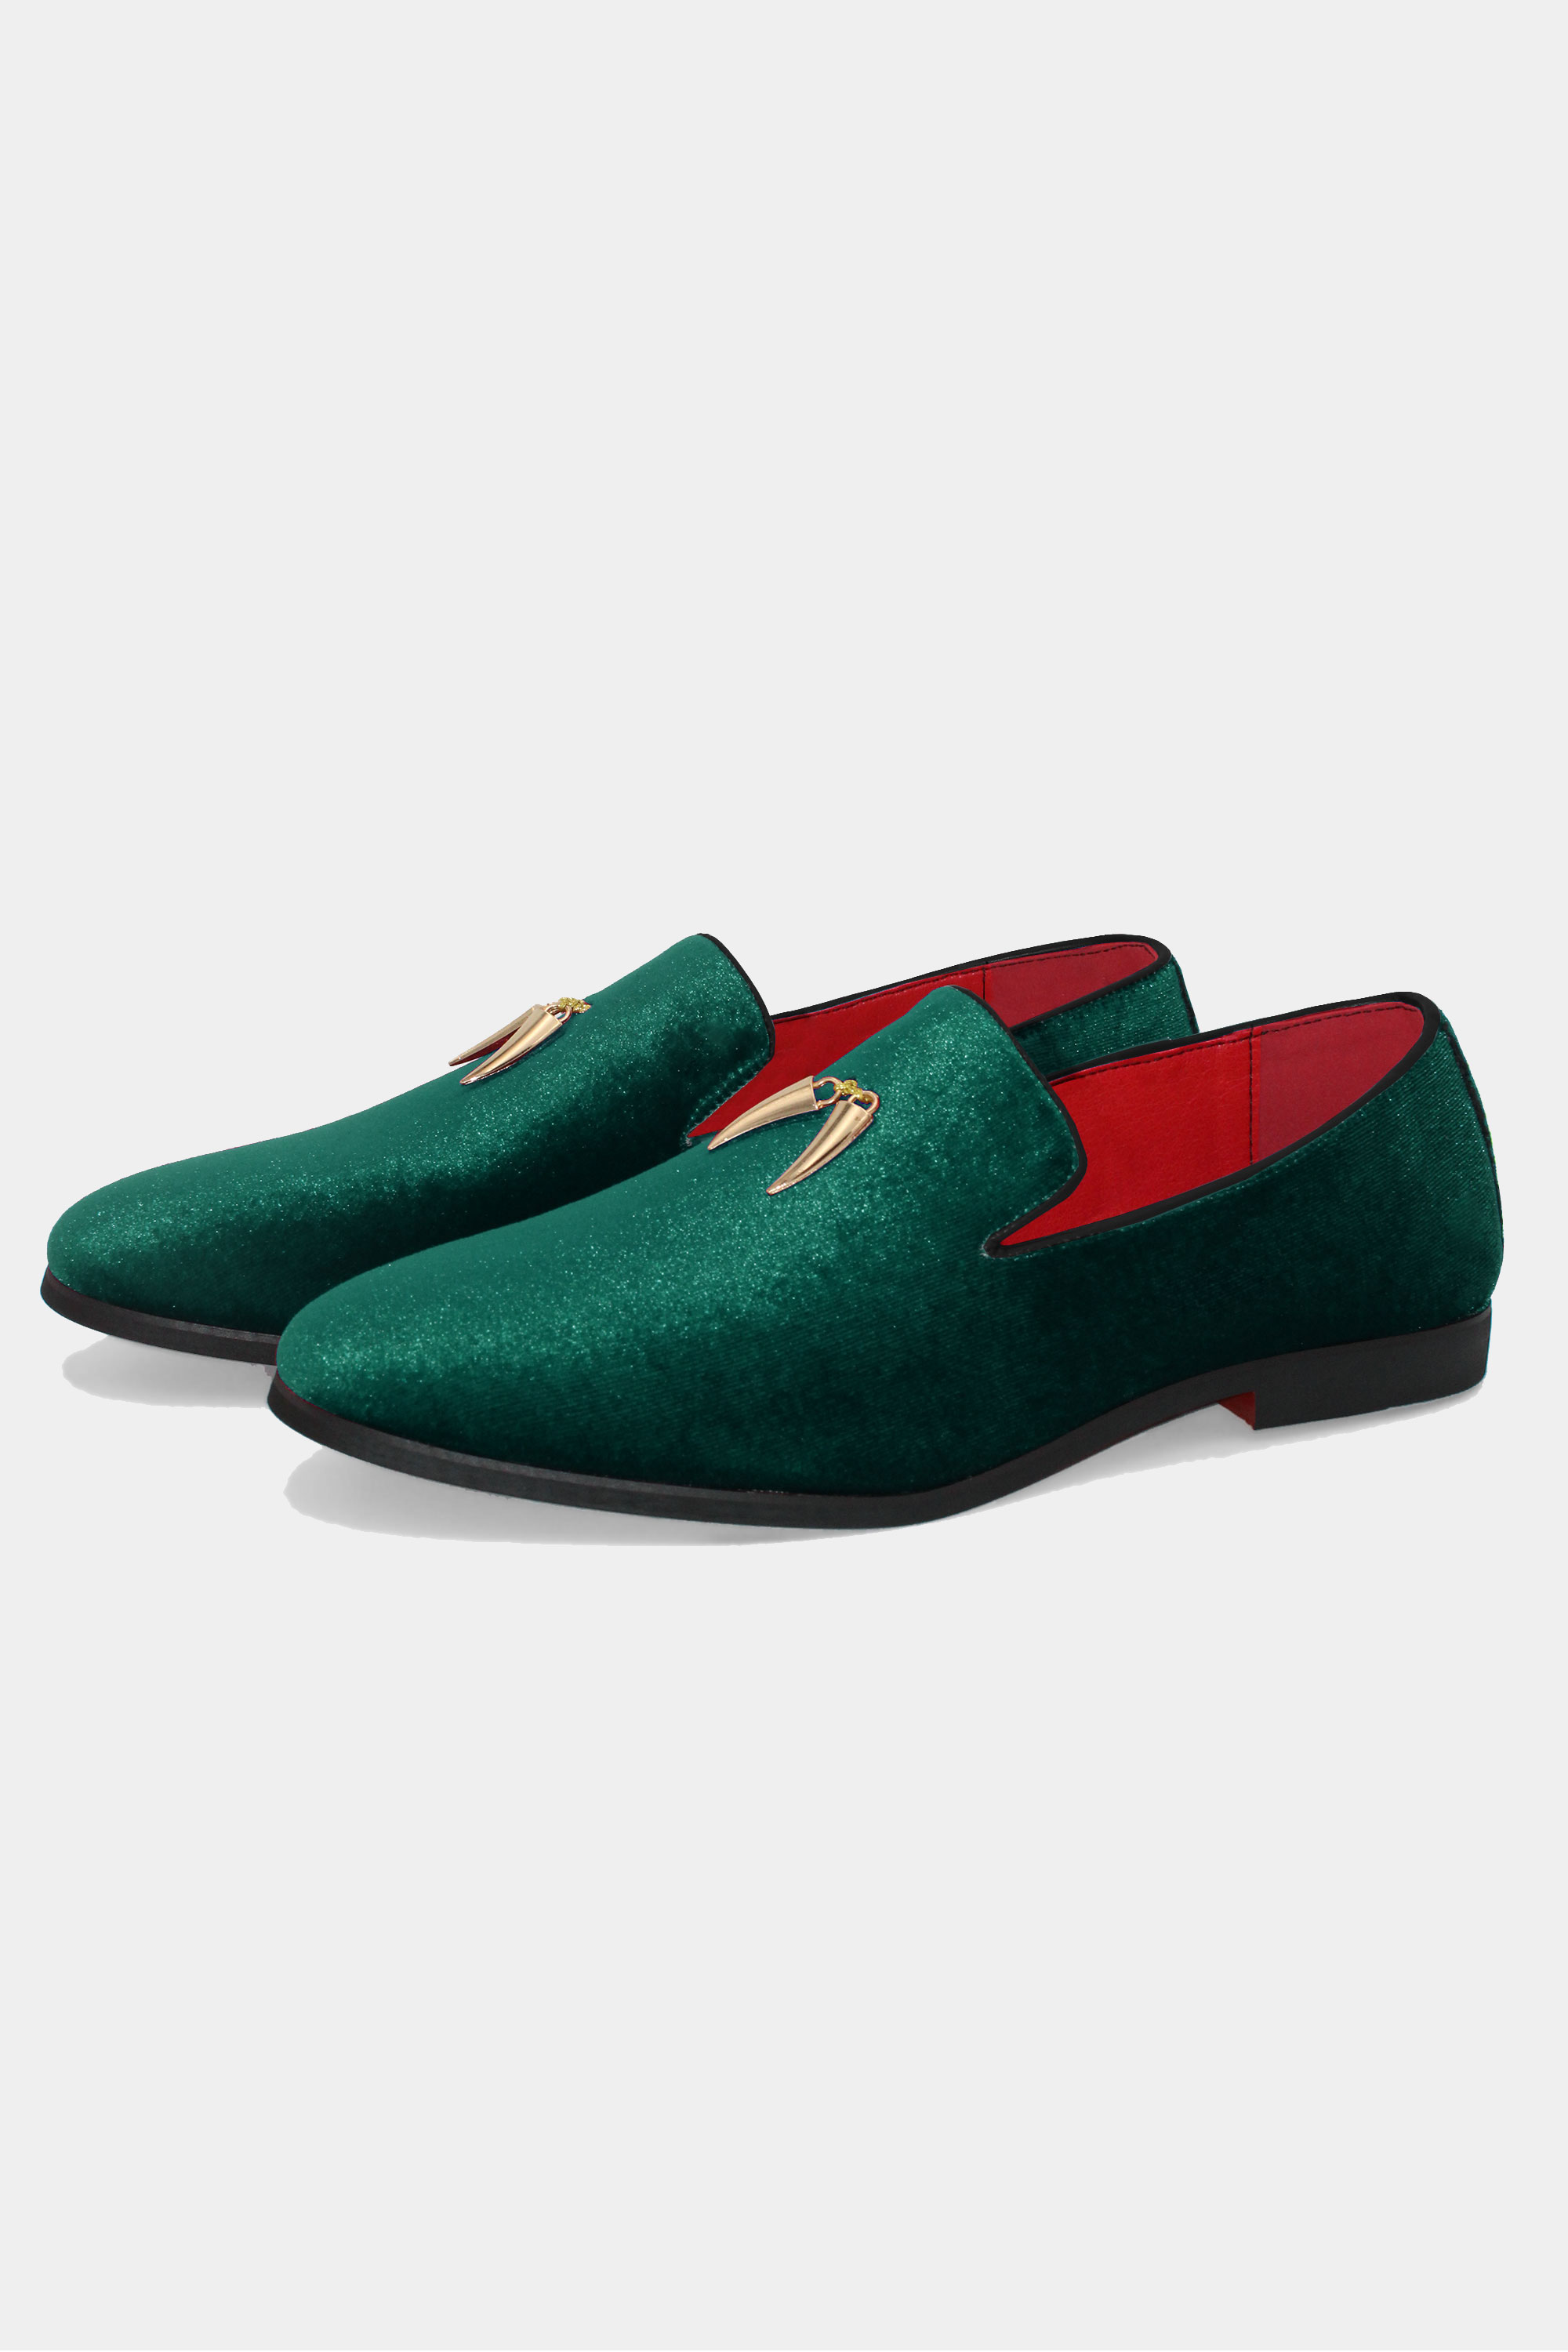 Mens-Green-Velvet-Shoes-Loafer-Suede-Groom-Wedding-Shoes-from-Gentlemansguru.com